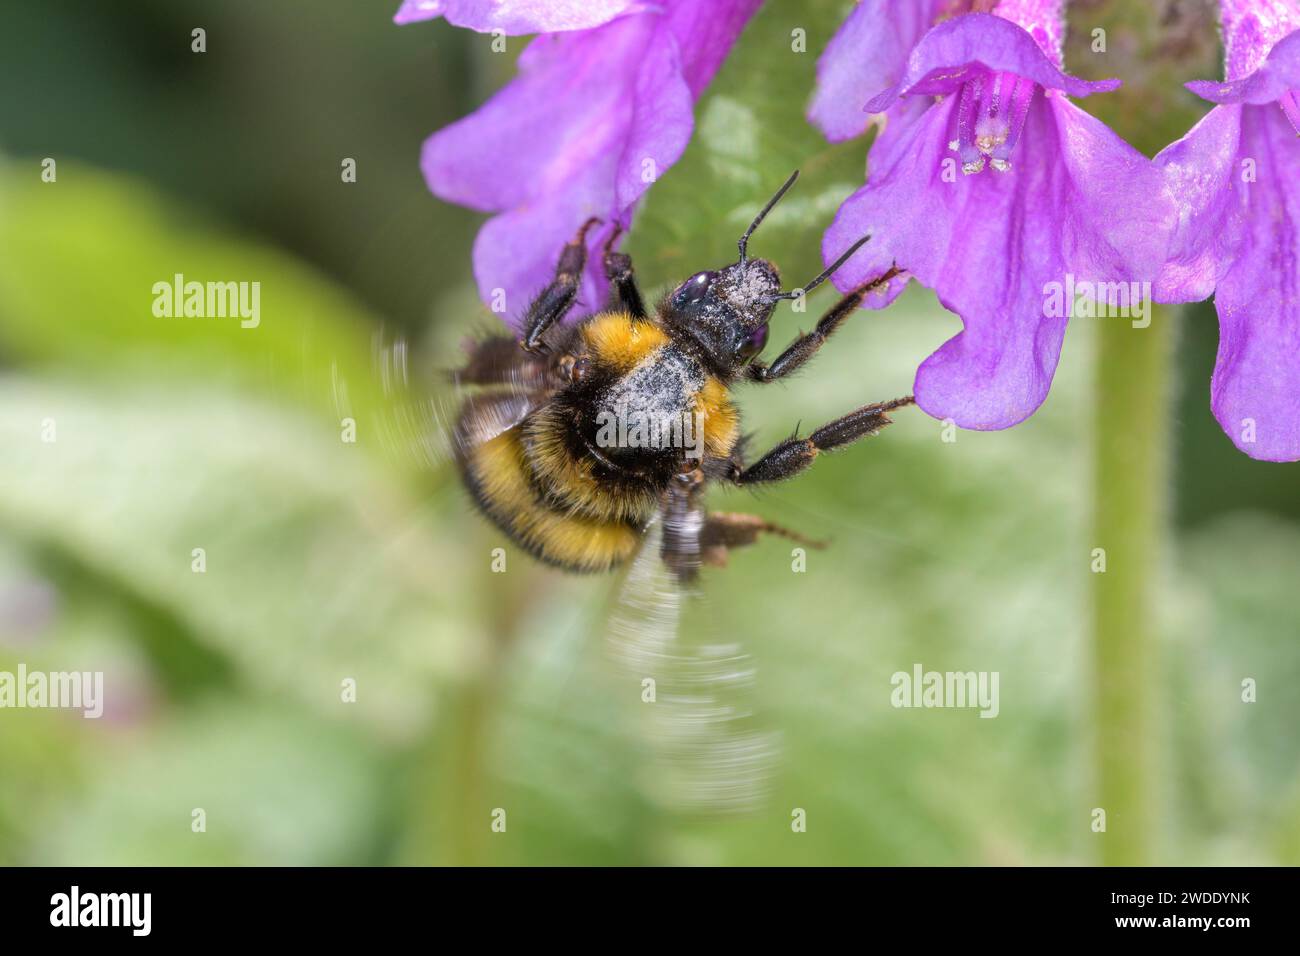 Garden bumblebee or small garden bumblebee - Bombus hortorum pollinates a blossom of the Big betony - Betonica macrantha or Stachys macrantha Stock Photo